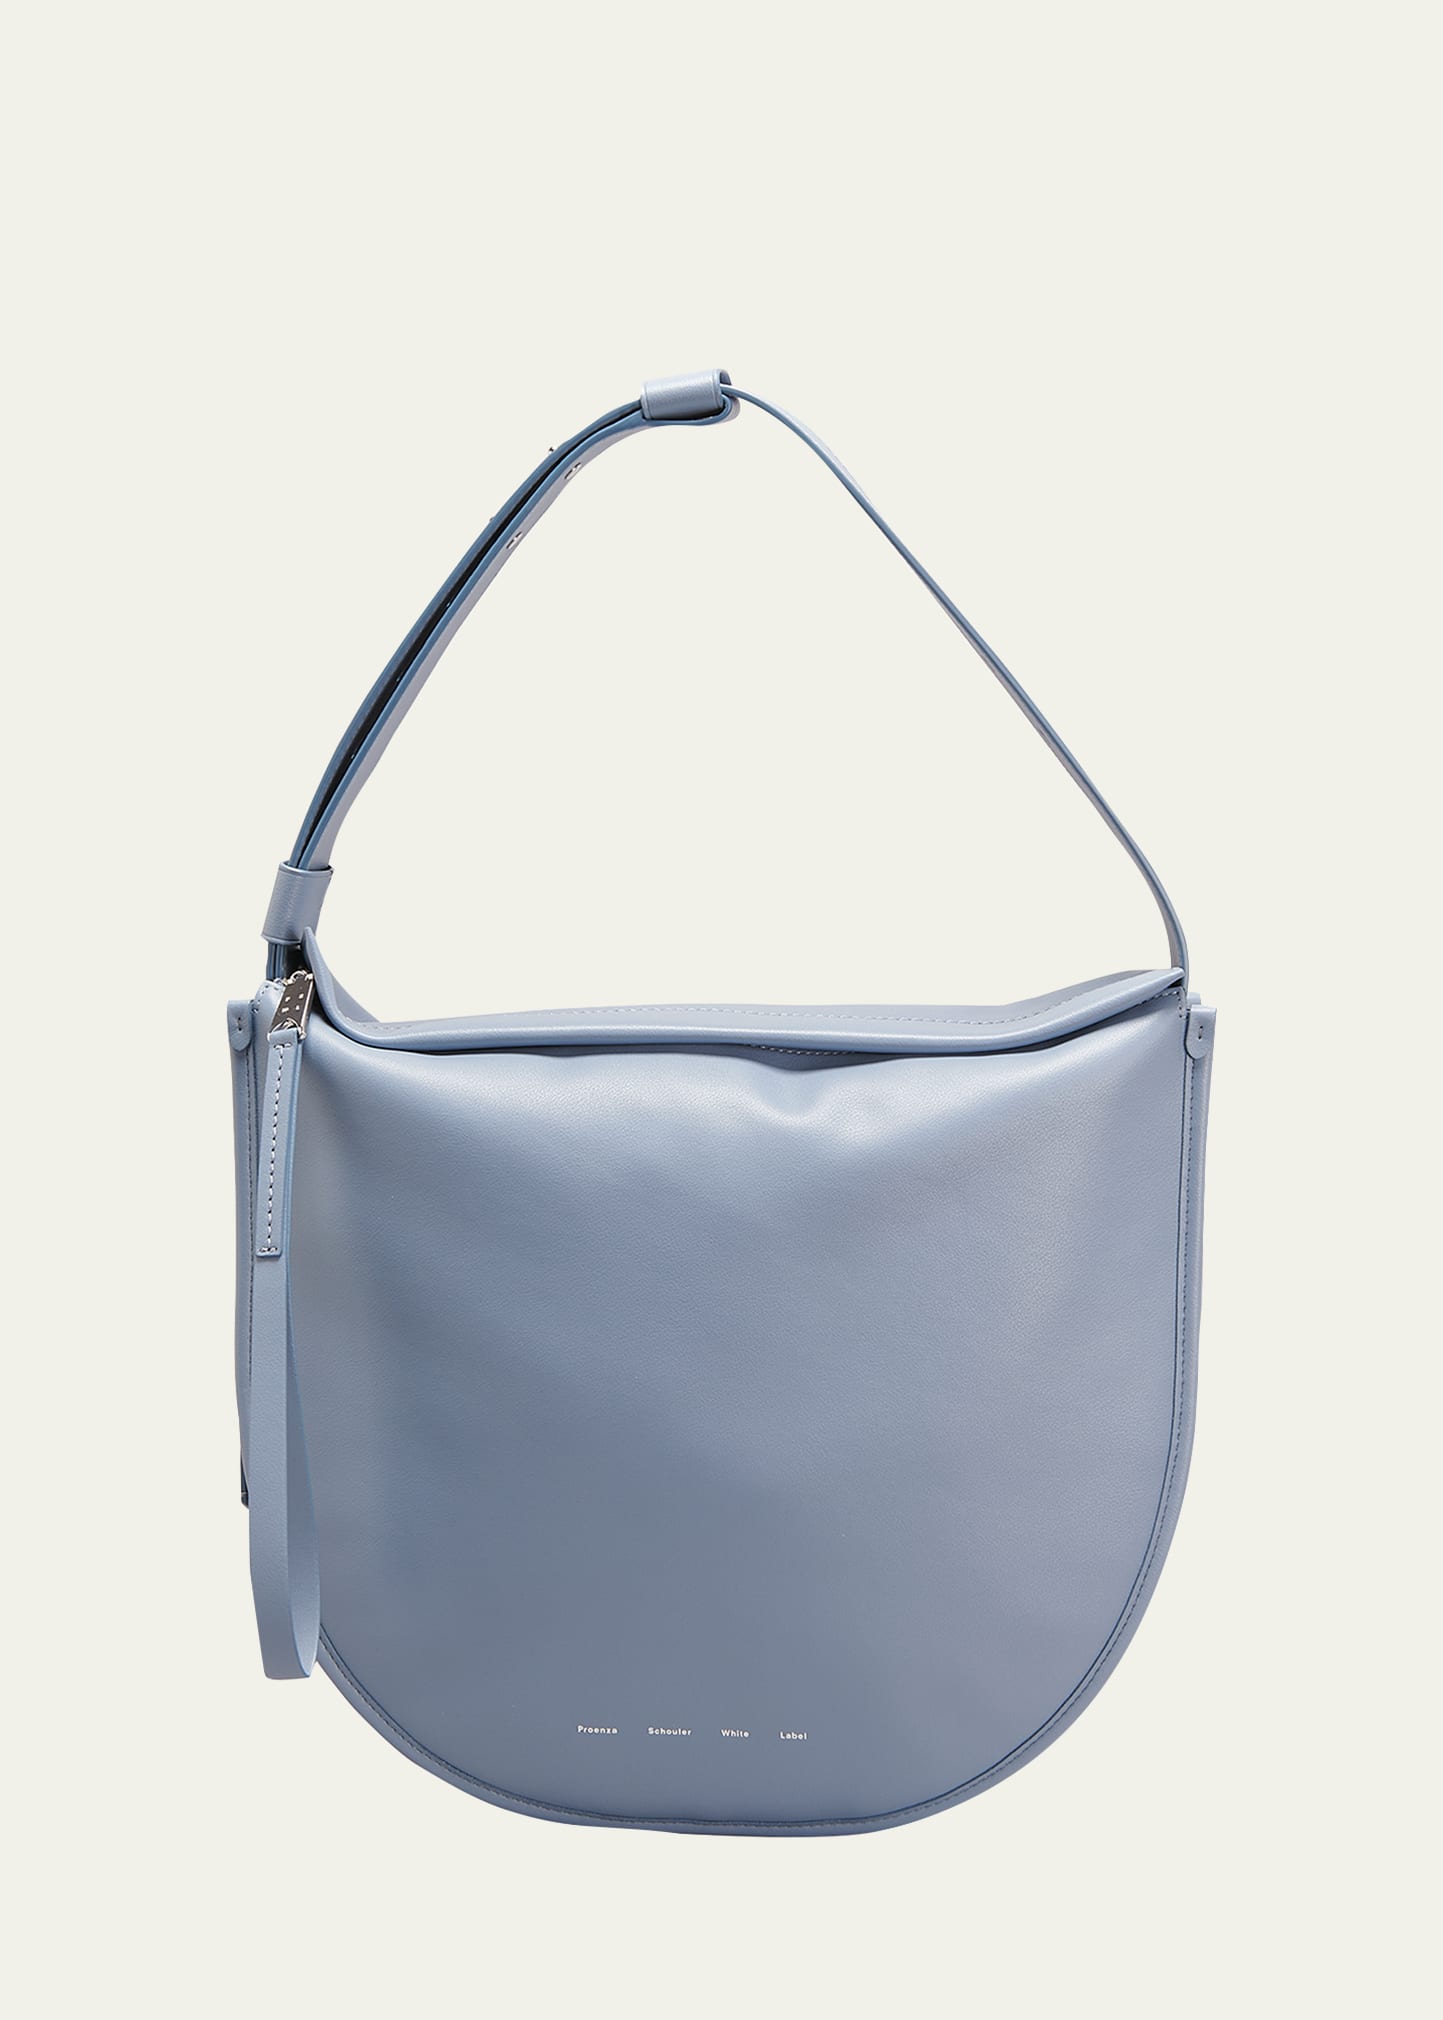 Proenza Schouler White Label Baxter Zip Leather Hobo Bag In 421 Dove Grey